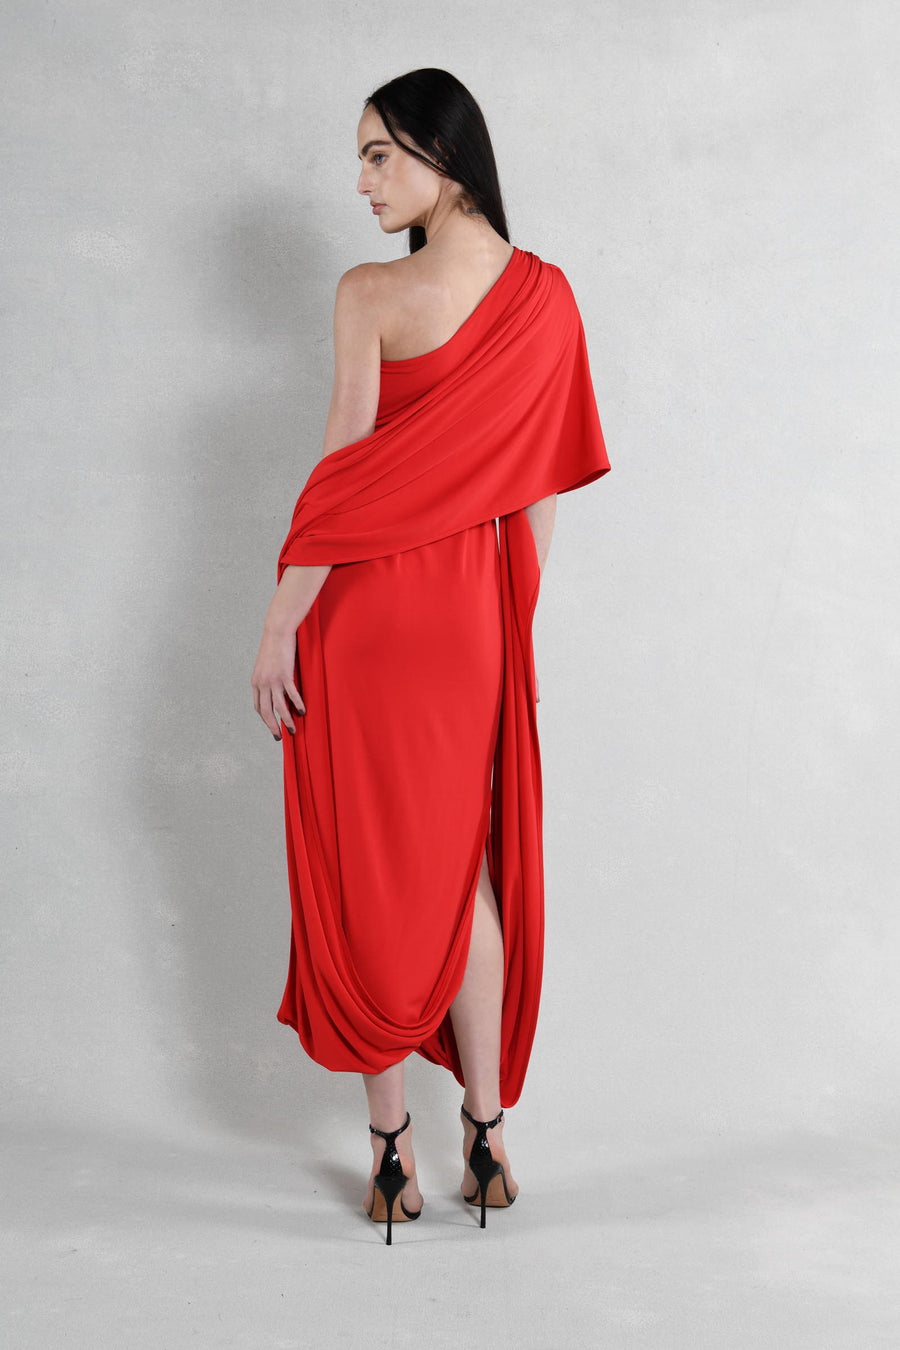 Everyway Dress : Red Matte Jersey